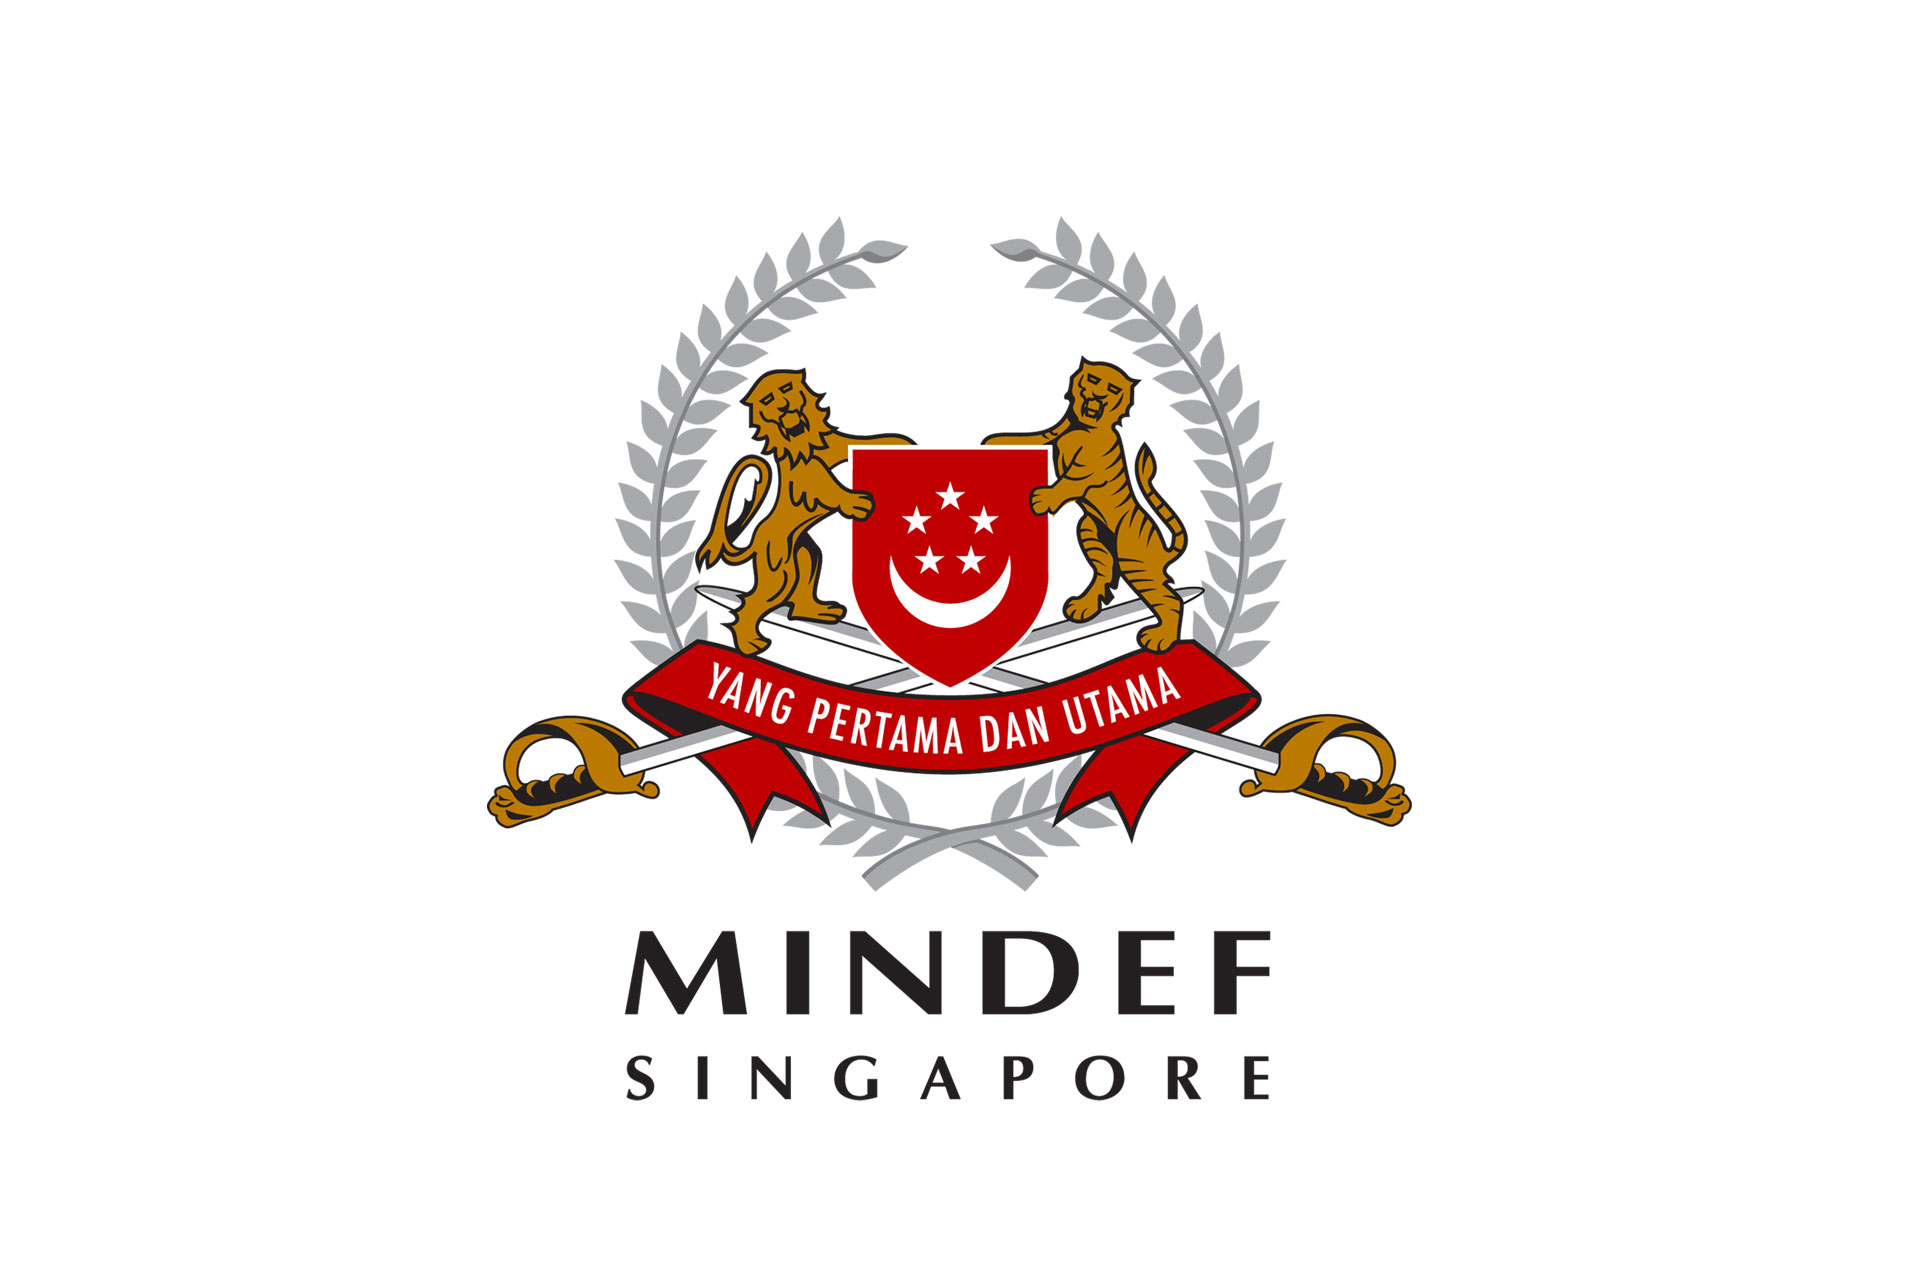 MINDEF logo